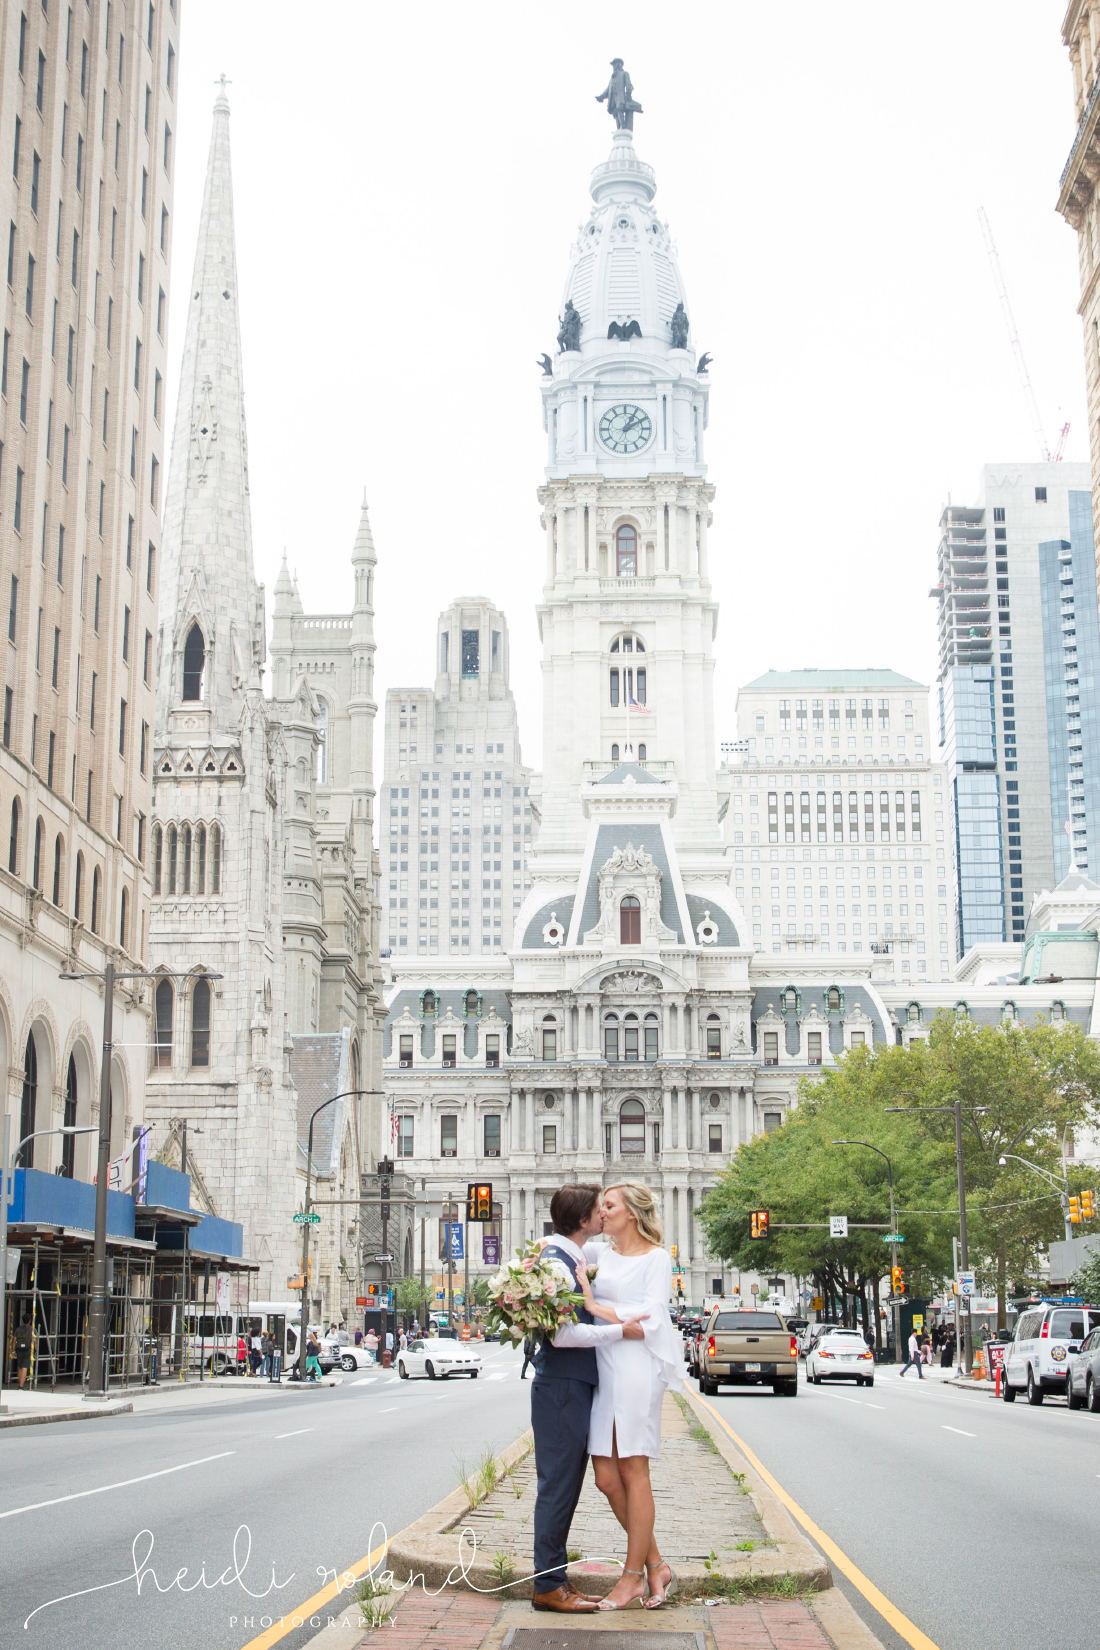 City Hall Bride and groom kissing